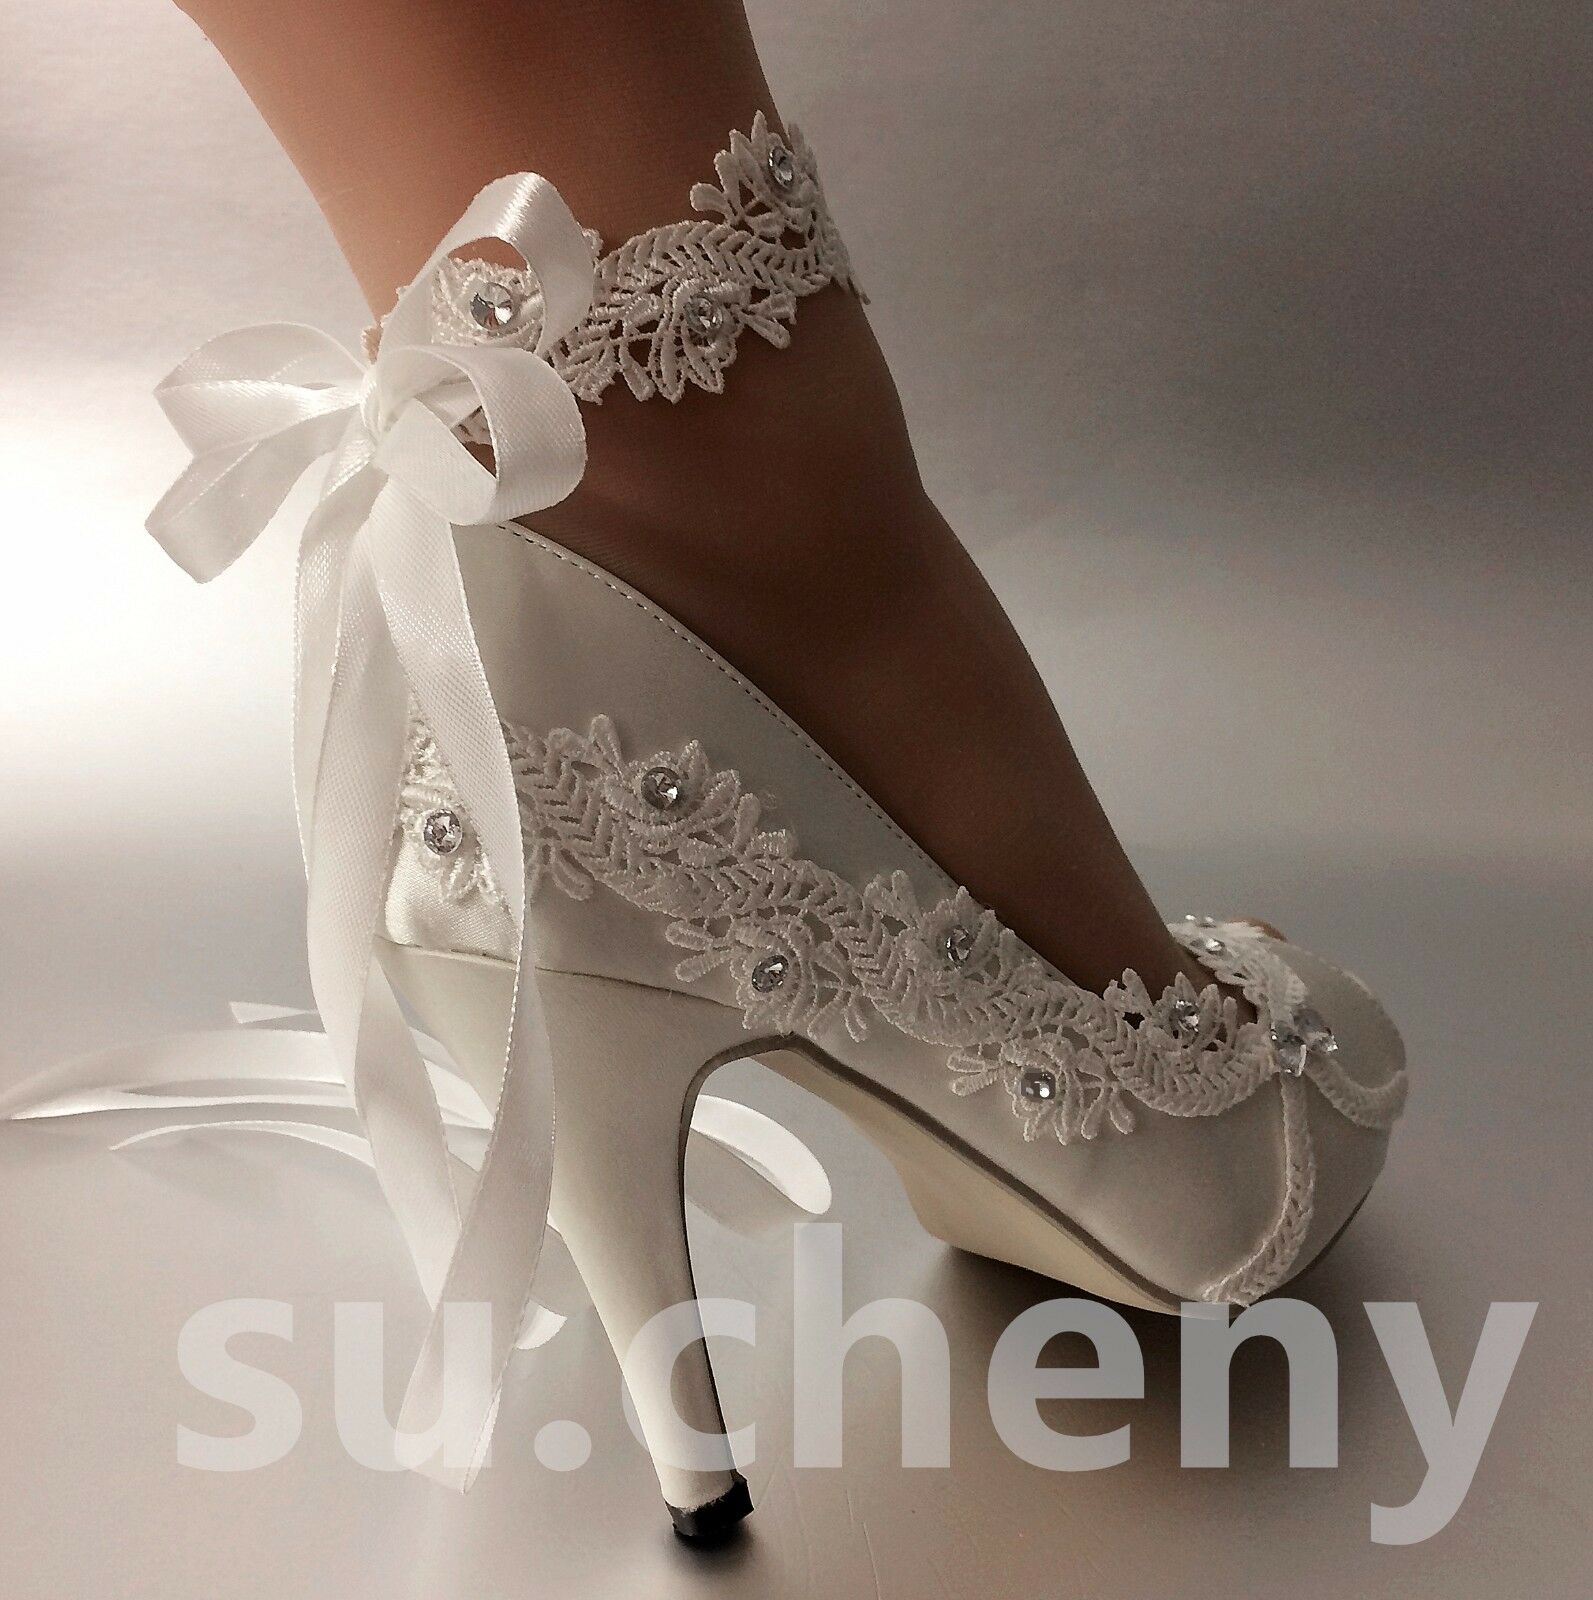 Su.cheny 3" 4" Heel Satin White Ivory Lace Ribbon Anklet Open Toe Wedding Shoes